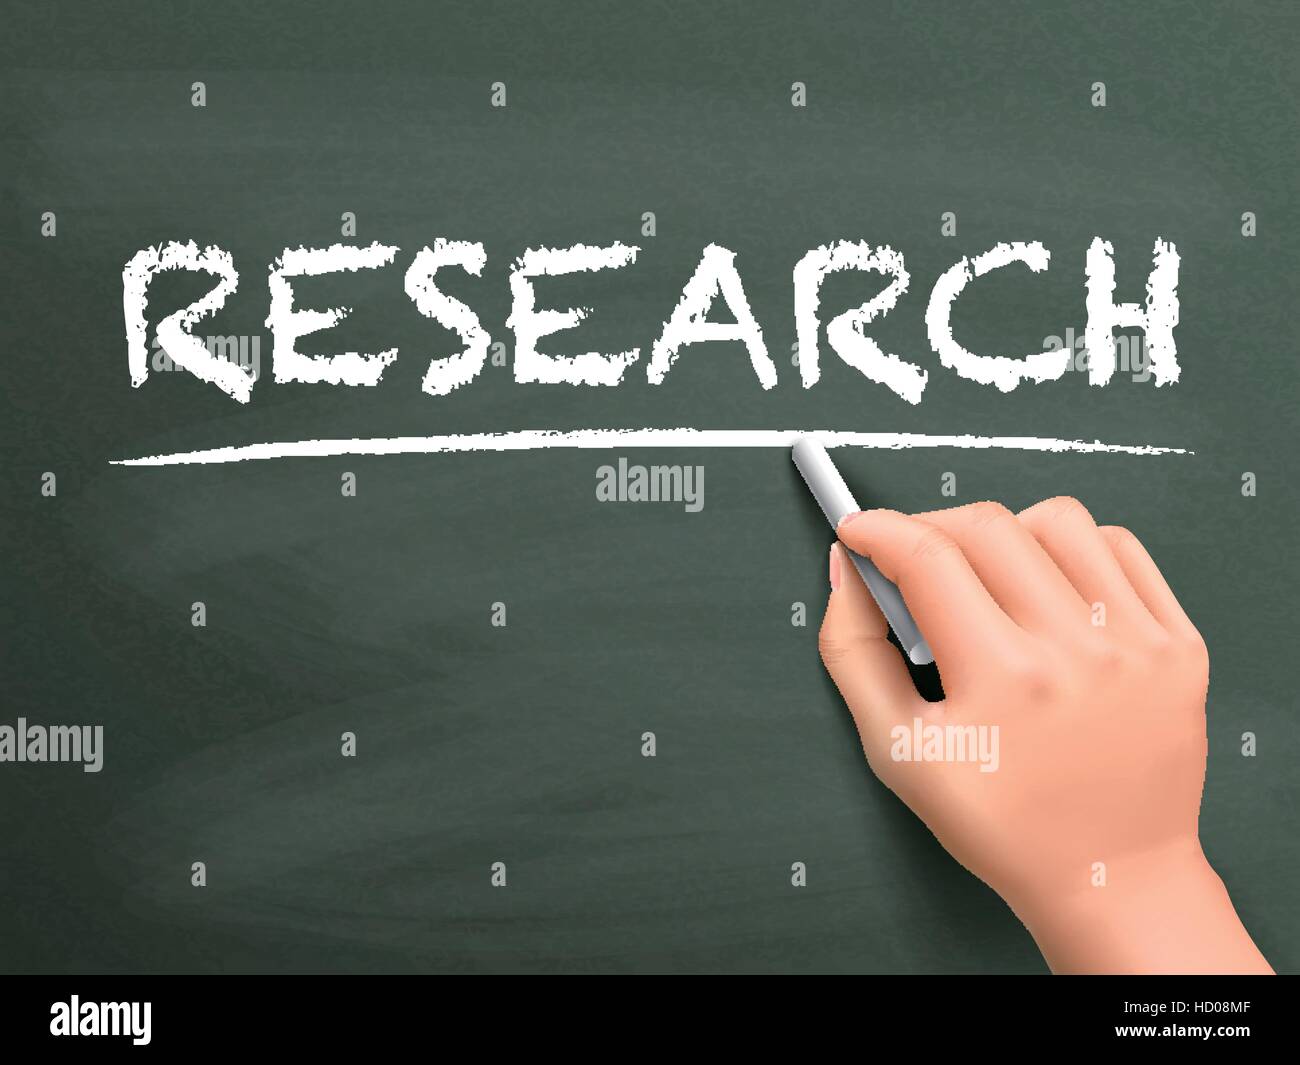 research word written by hand on blackboard Stock Vector